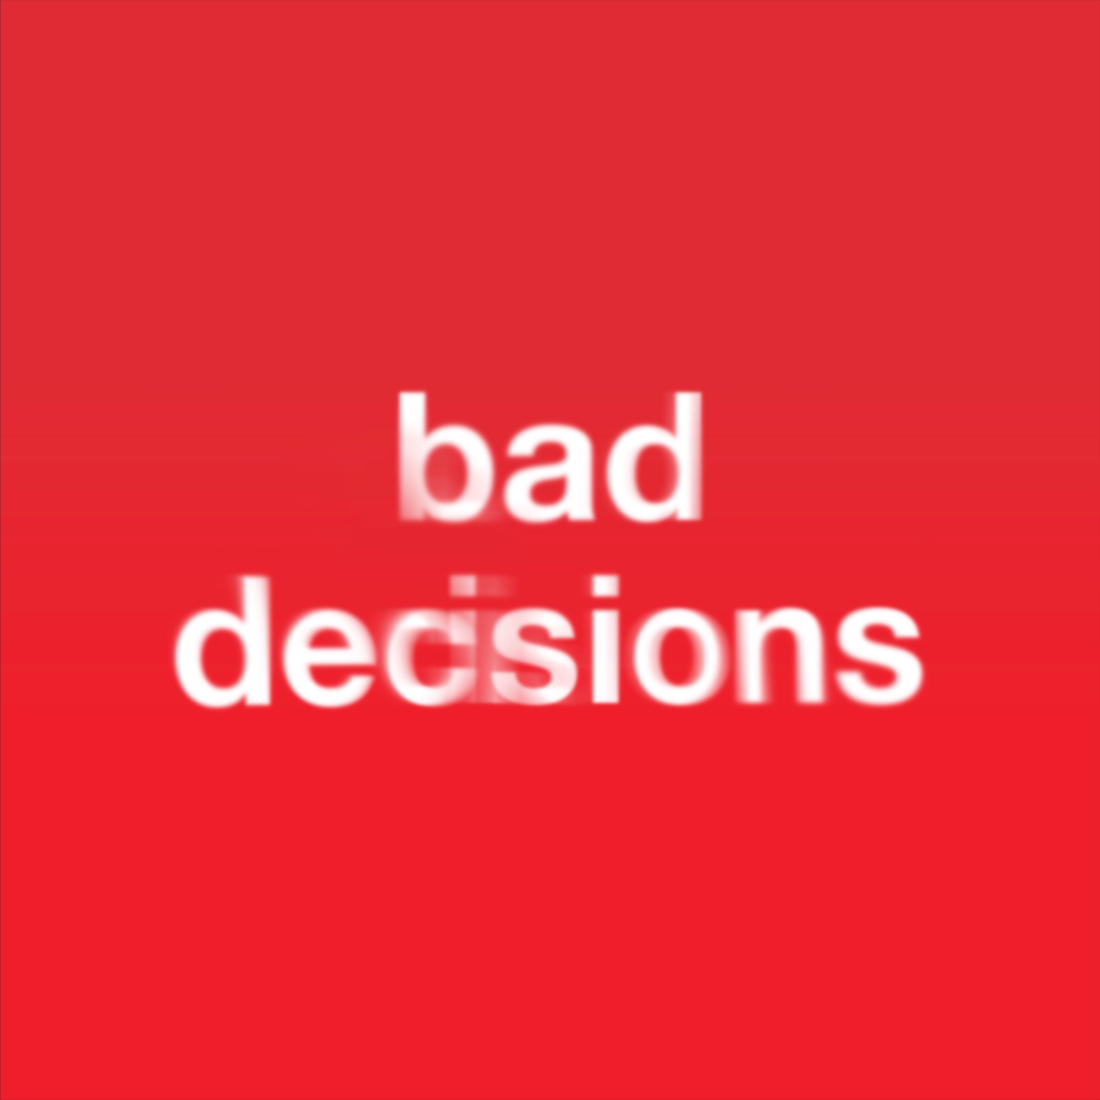 𝗦𝗢𝗡𝗚 𝗢𝗙 𝗧𝗛𝗘 𝗗𝗔𝗬: benny blanco, BTS & Snoop Dogg – Bad Decisions